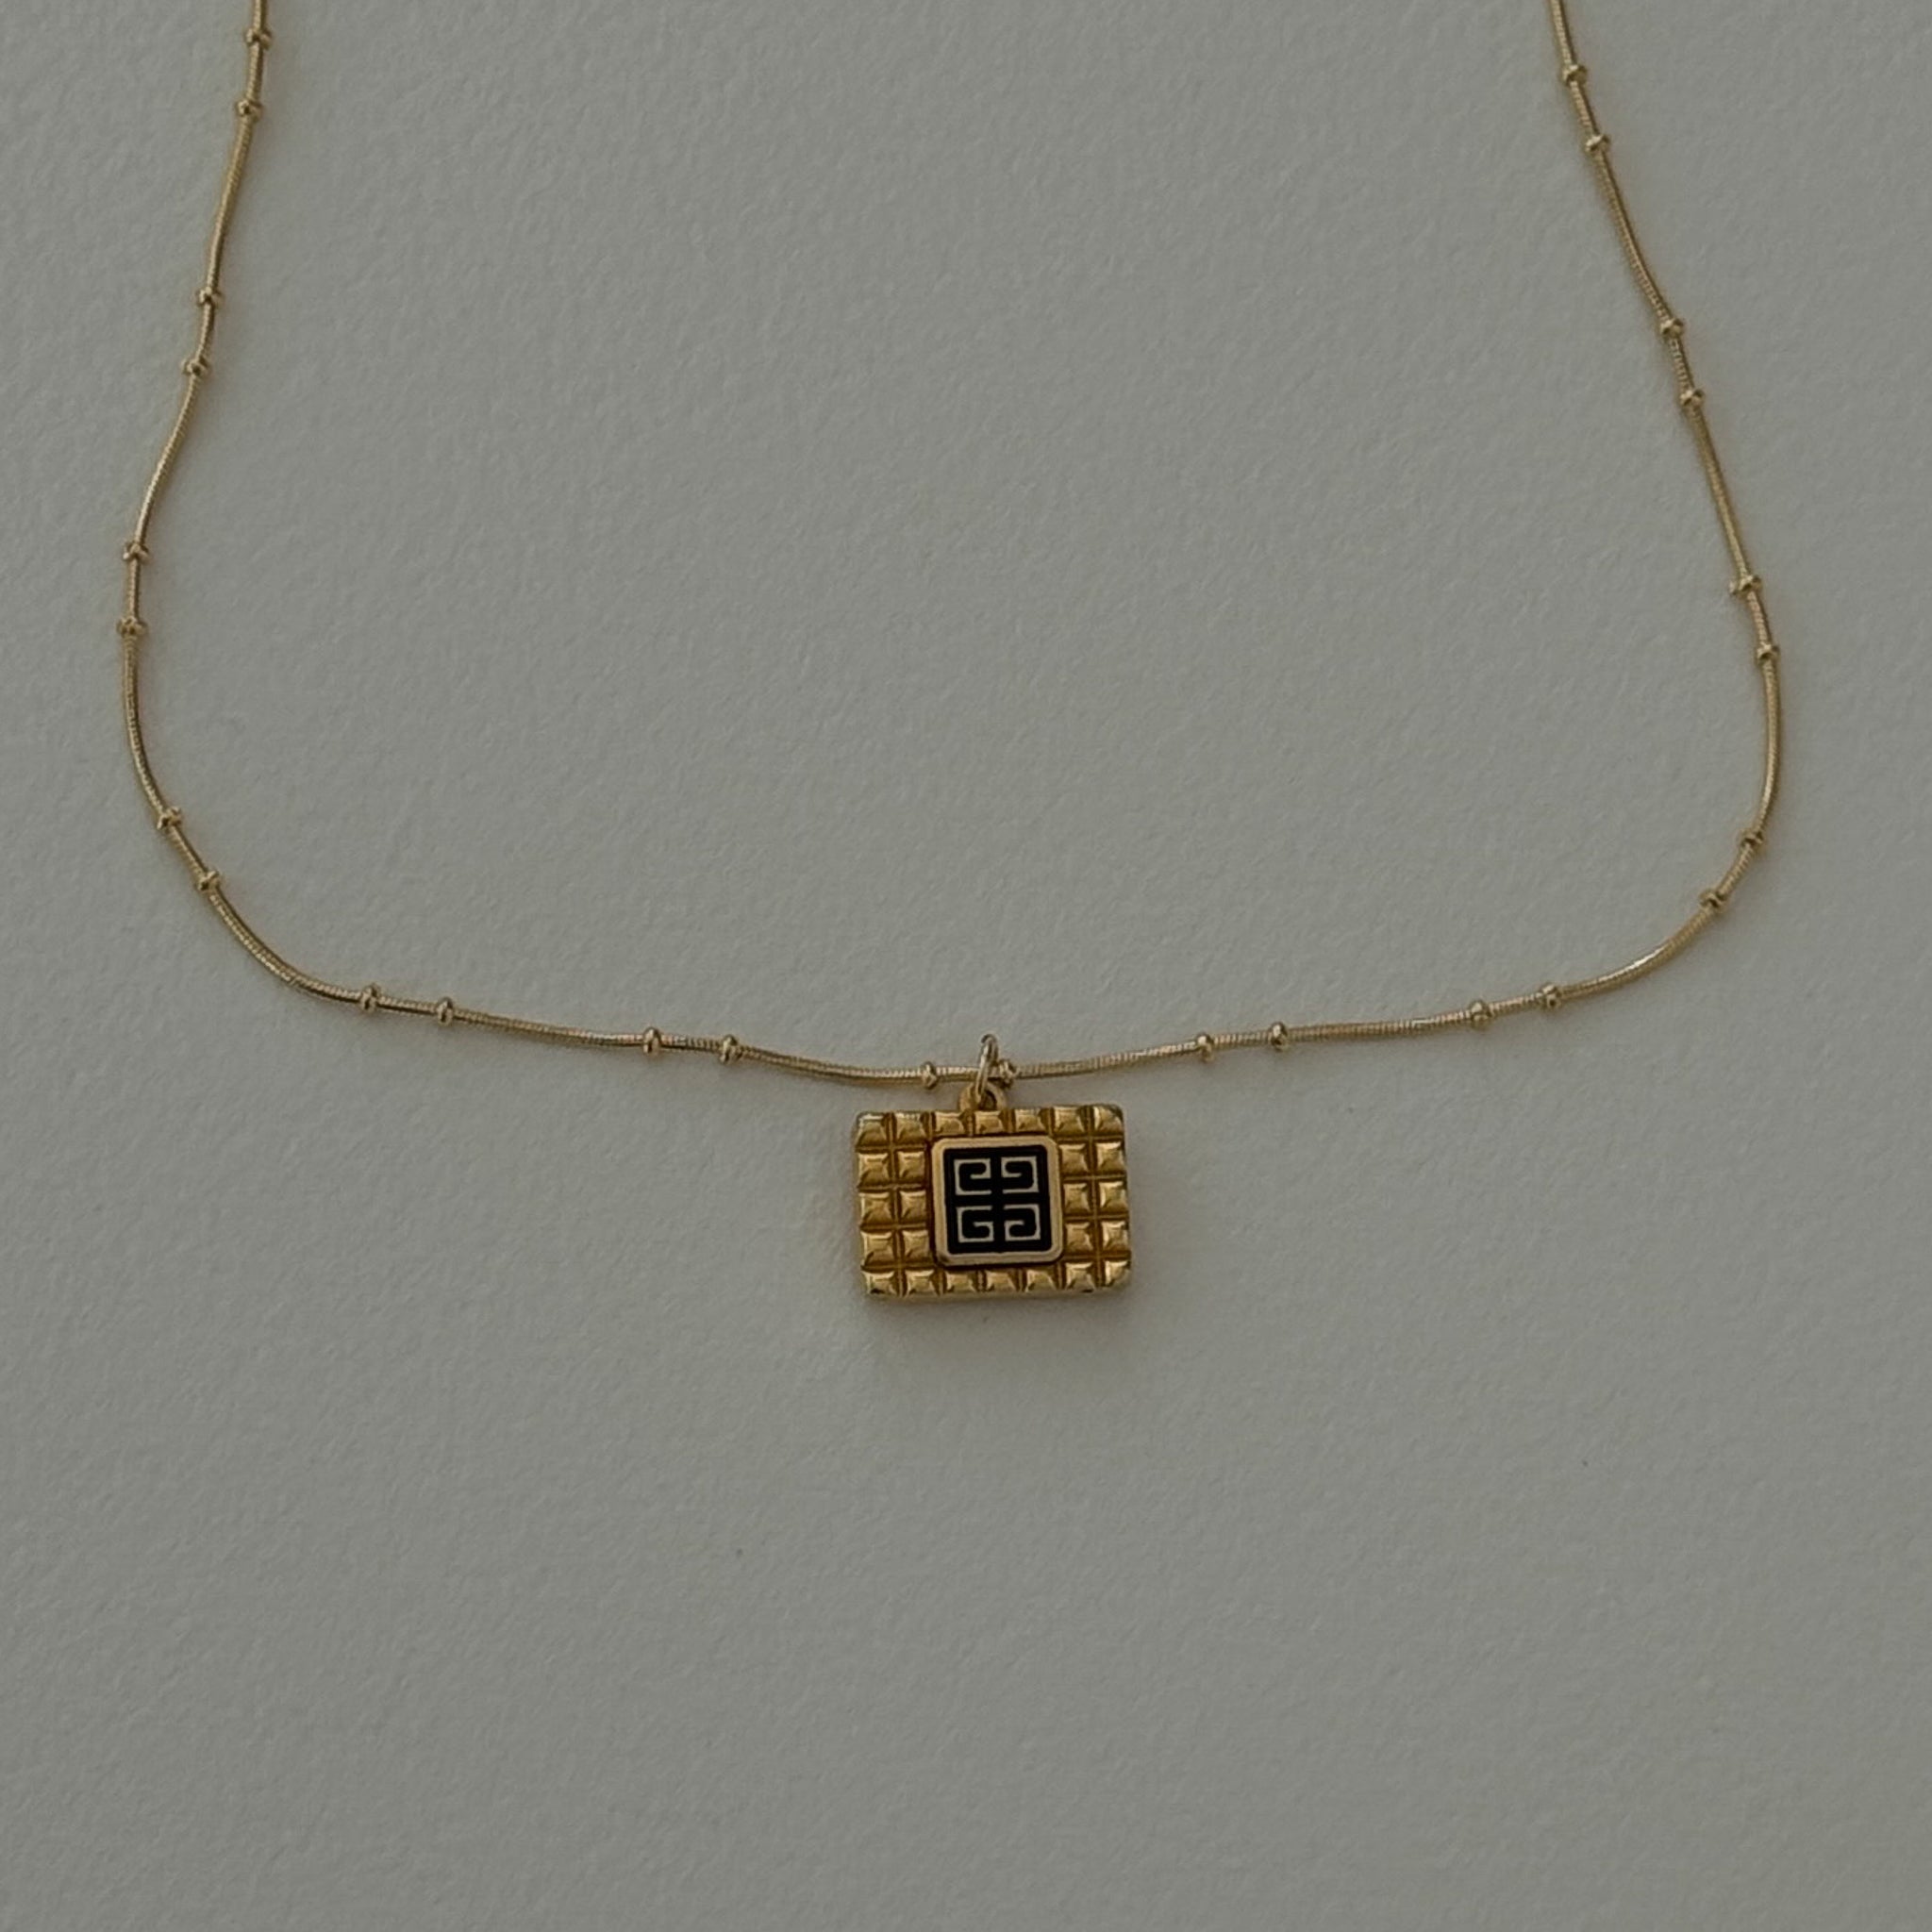 Vintage Repurposed Designer Givenchy Gold Pendant Necklace